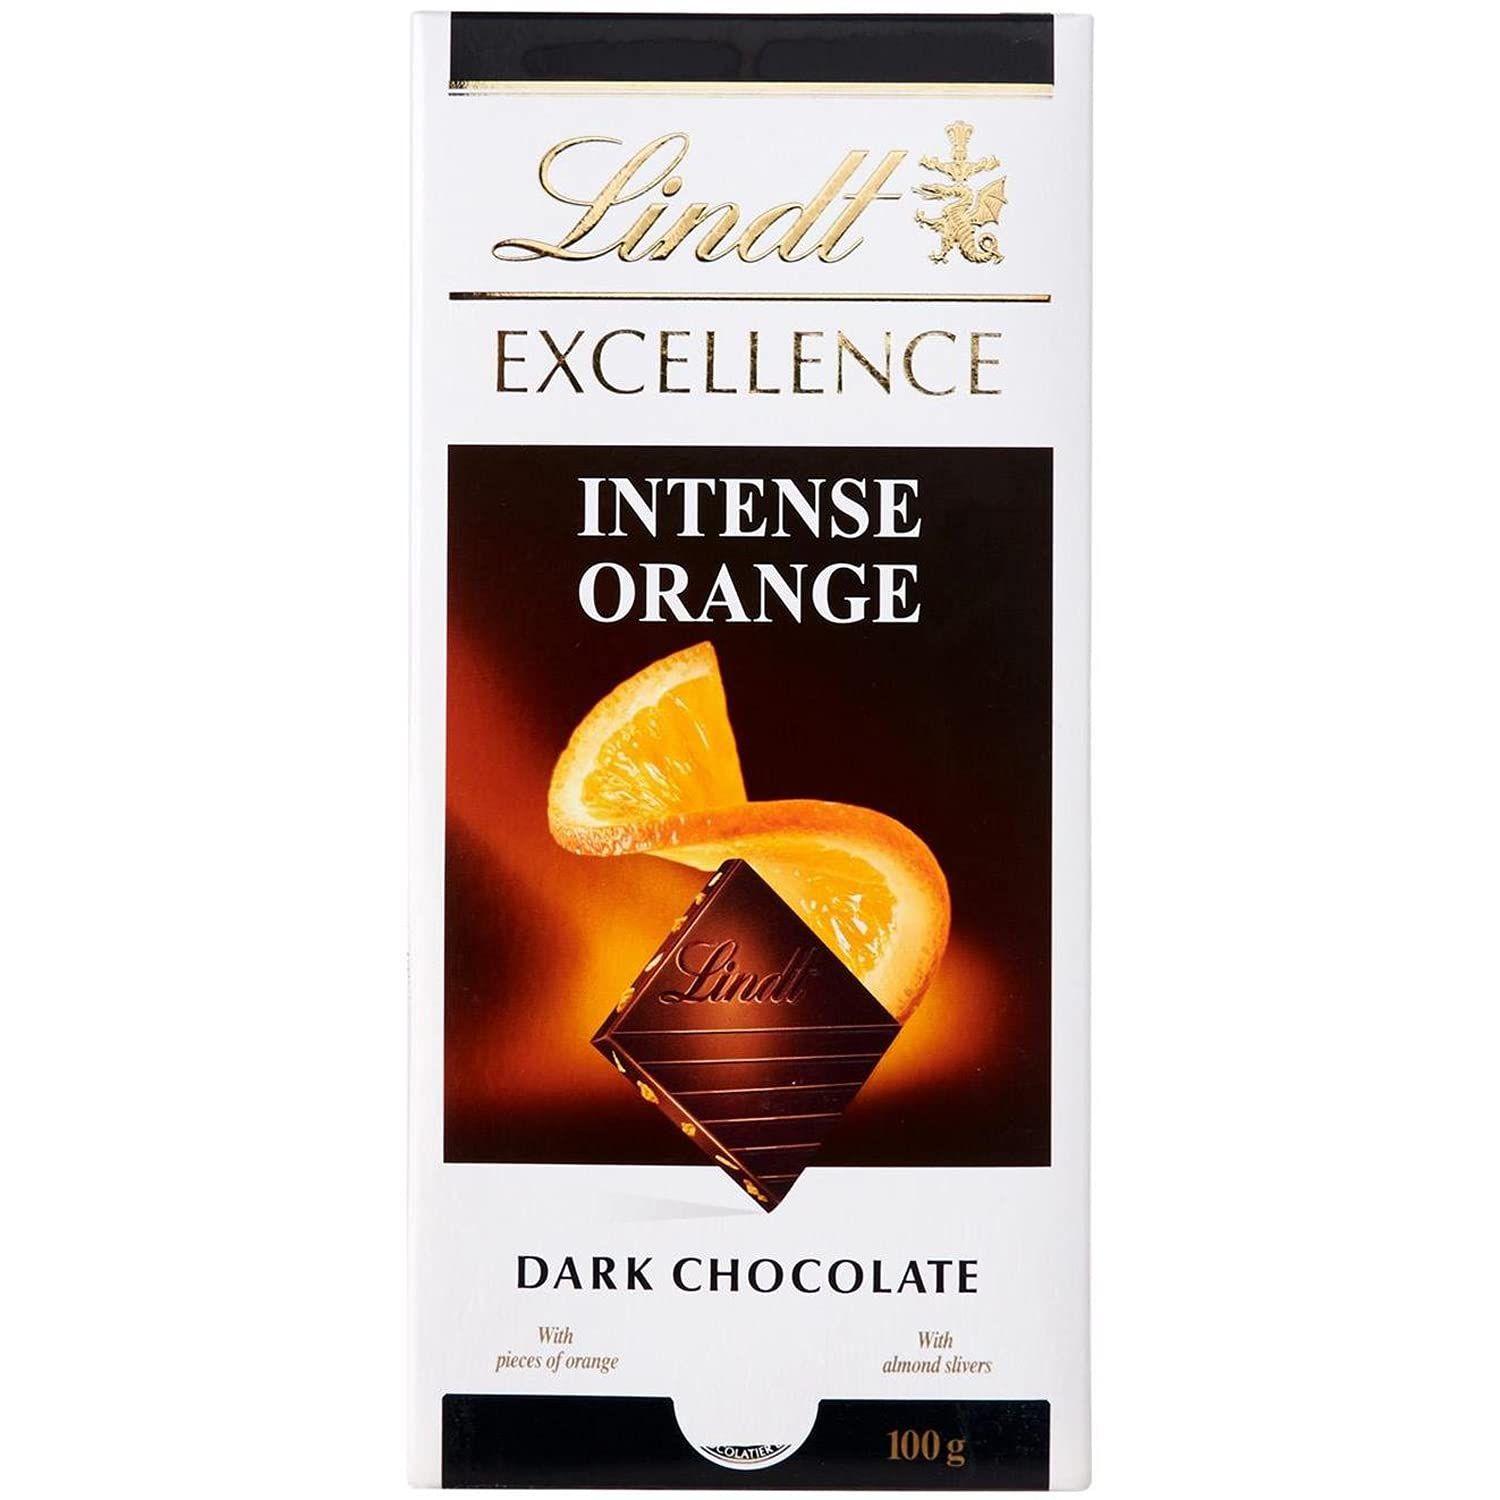 Lindt Excellence Orange Intense Dark Chocolate Image